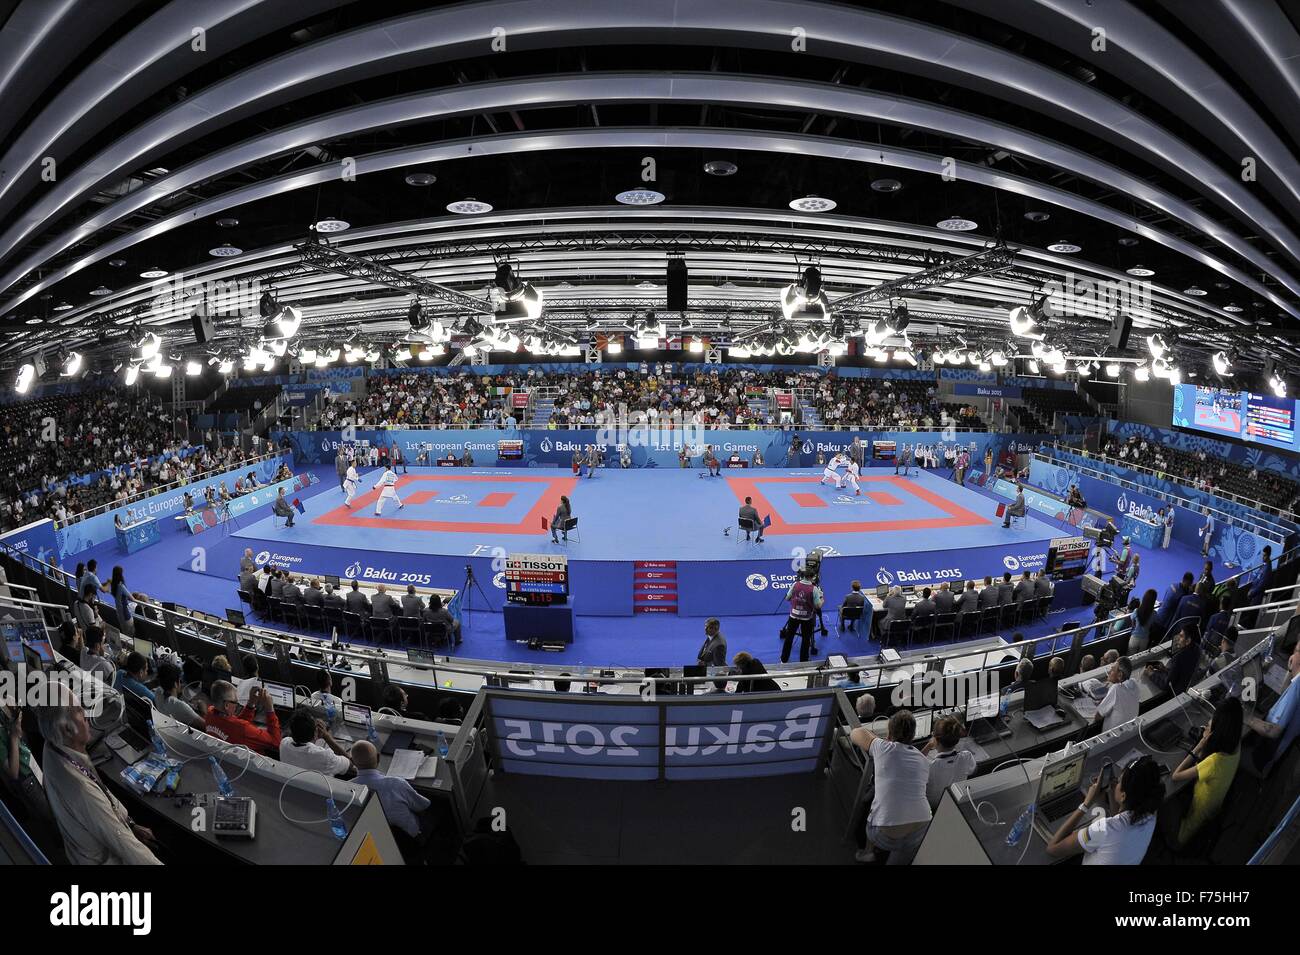 GV. Karate. Crystal Hall 3. Baku. Azerbaijan. Baku2015. 1st European Games. 13/06/2015. Stock Photo